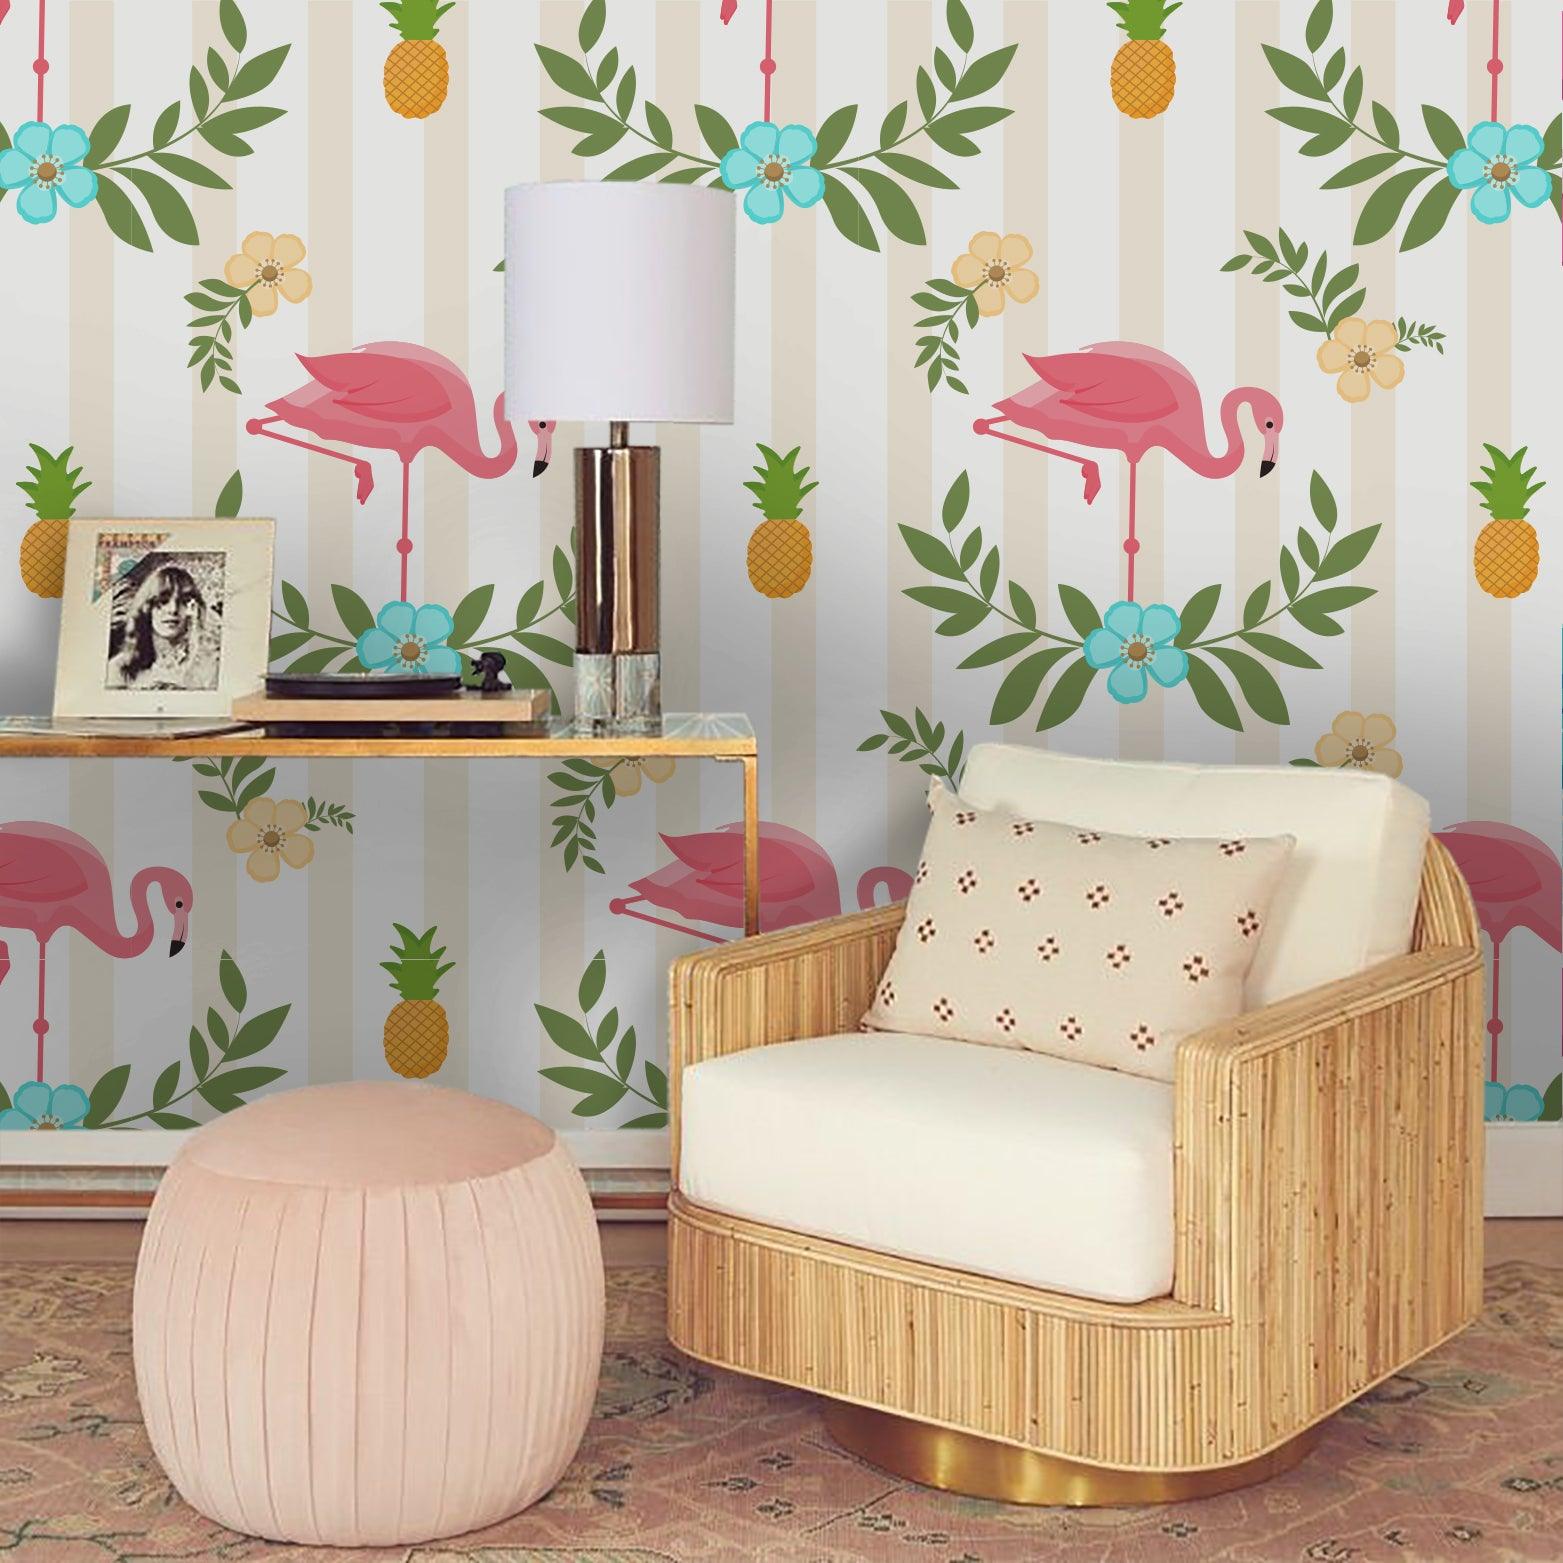 3D Flamingo Pineapple Wall Mural Wallpaper 3- Jess Art Decoration